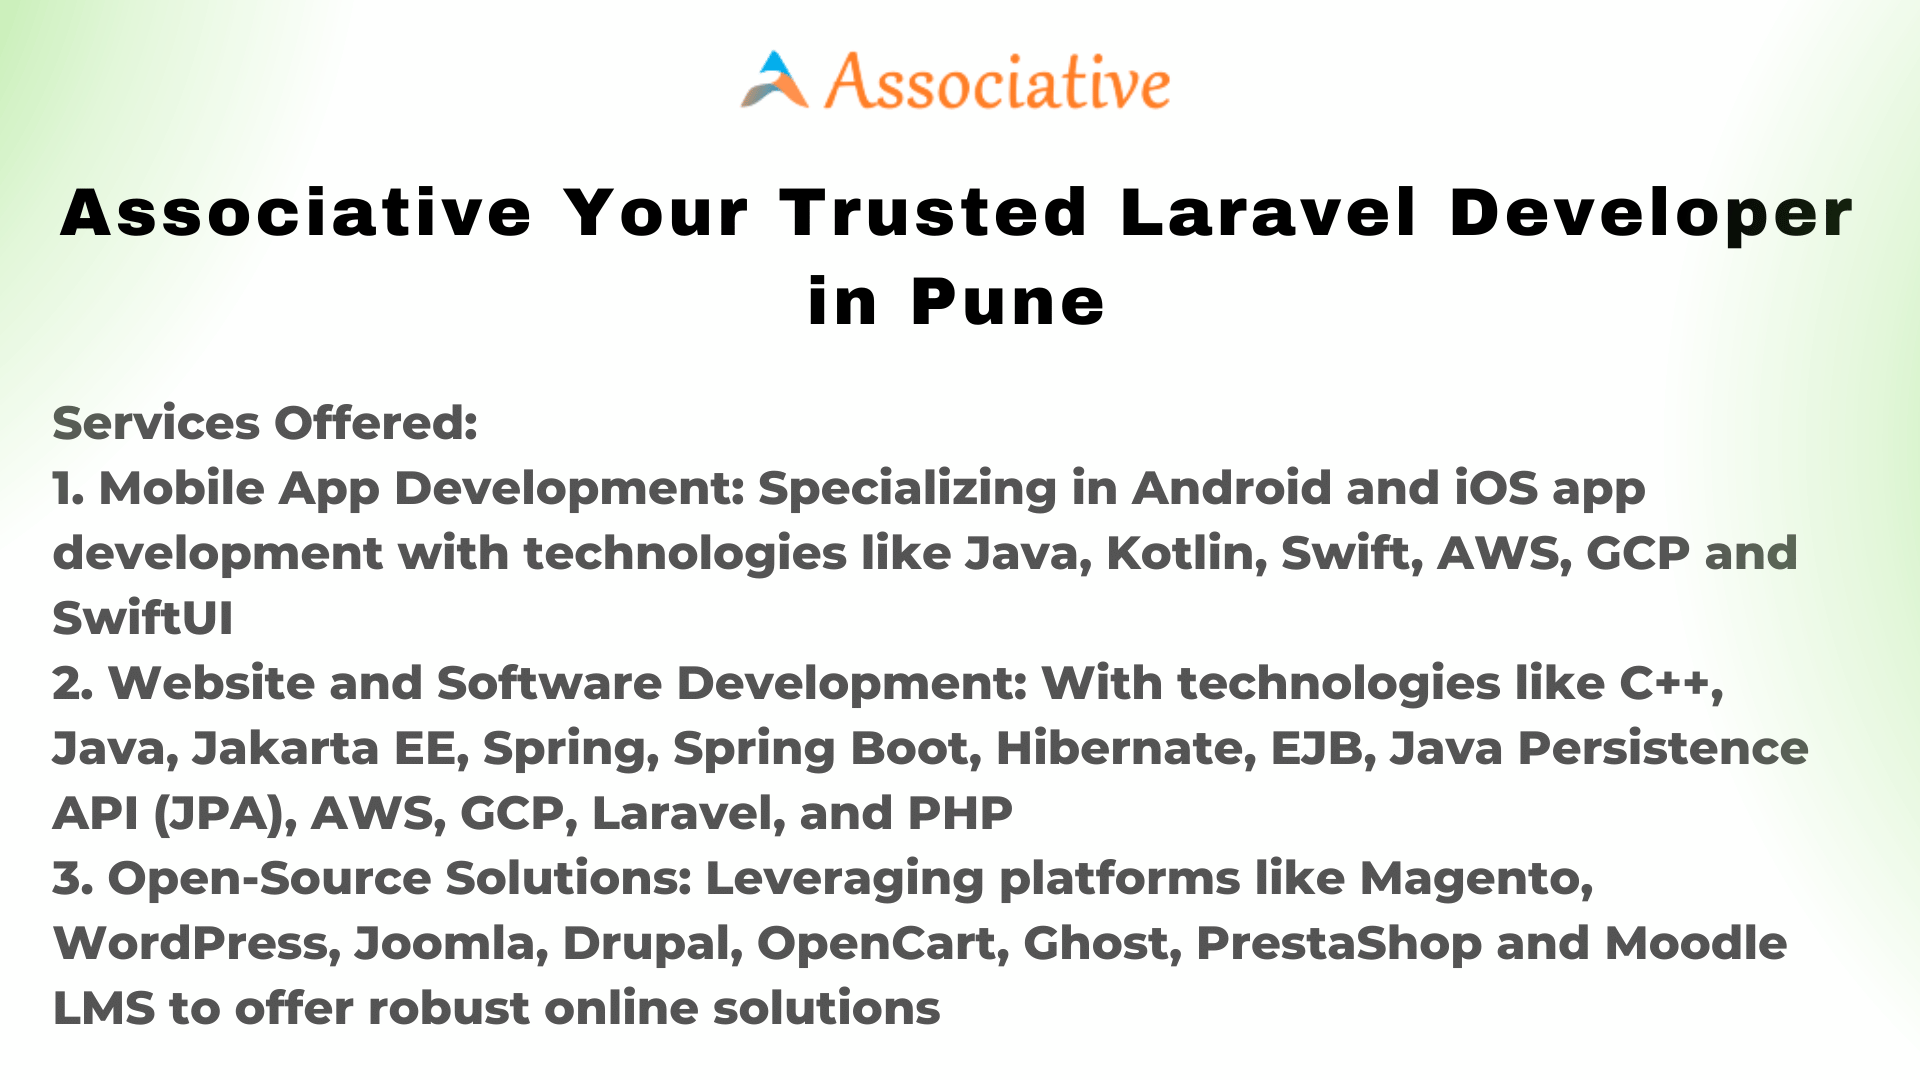 Associative Your Trusted Laravel Developer in Pune